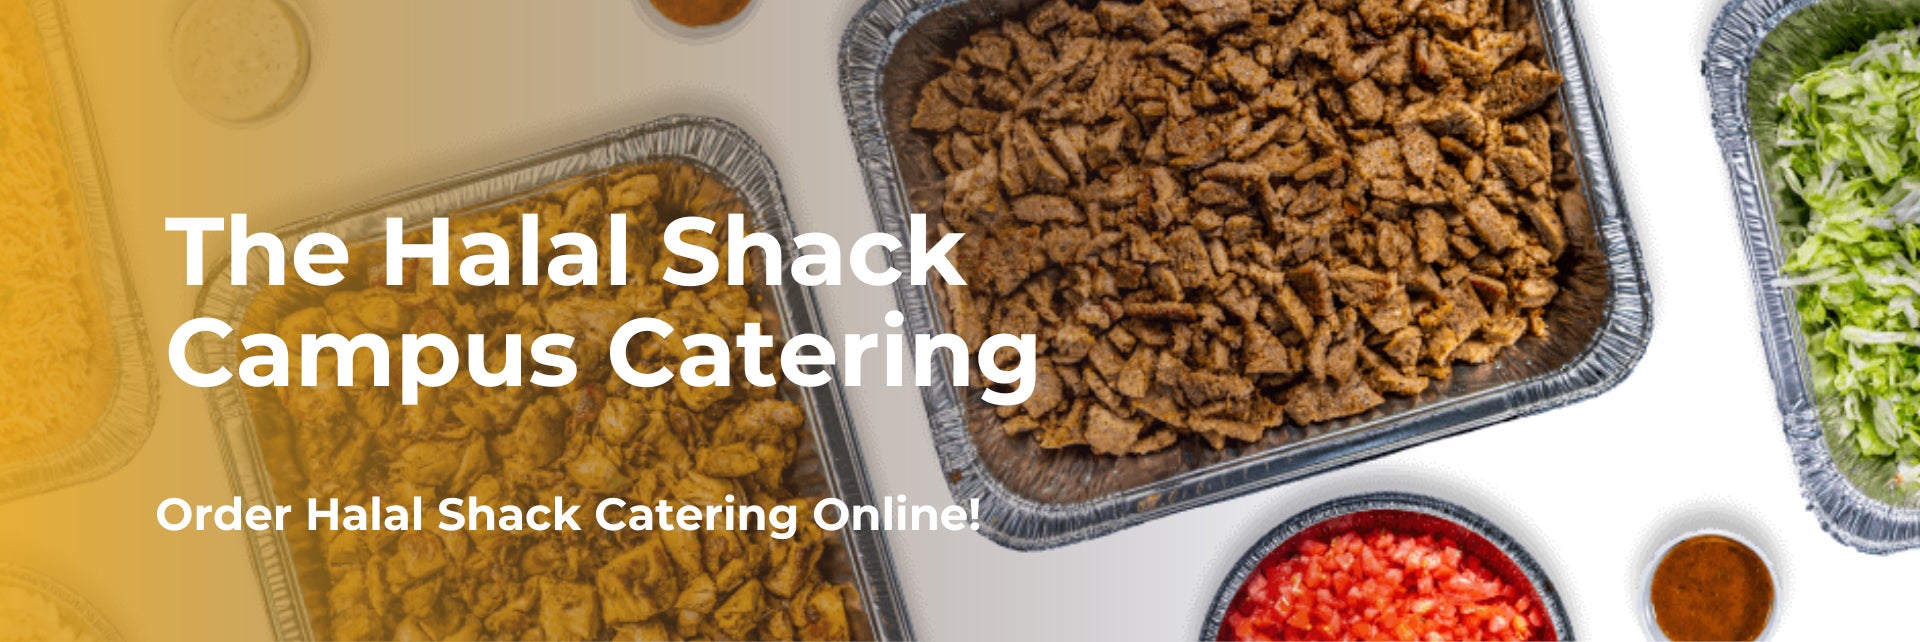 The Halal Shack Campus Catering, Order Halal Shack Catering Online!